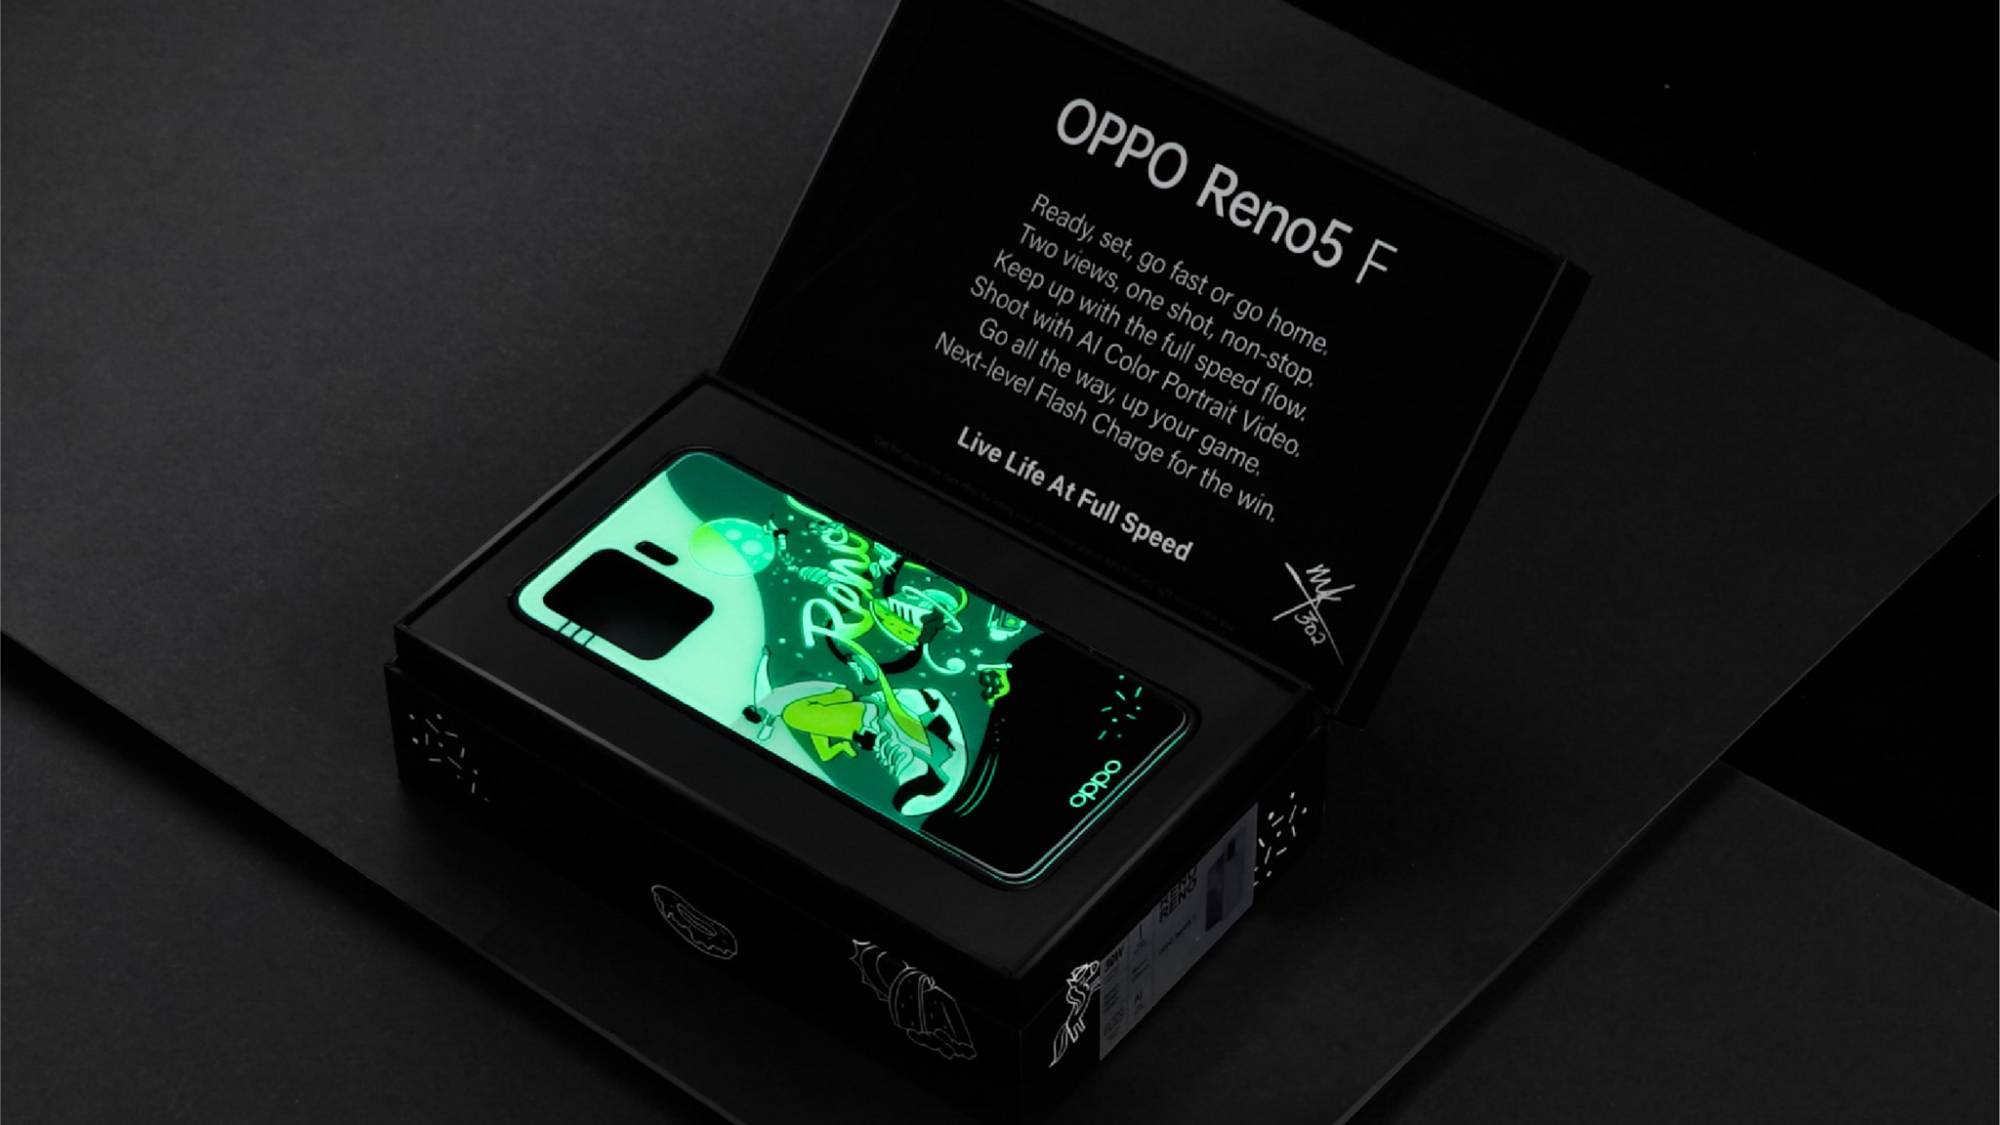 Oppo Akan Memperkenalkan Oppo Reno5 F Edisi MK K-Clique Secara Rasminya Esok